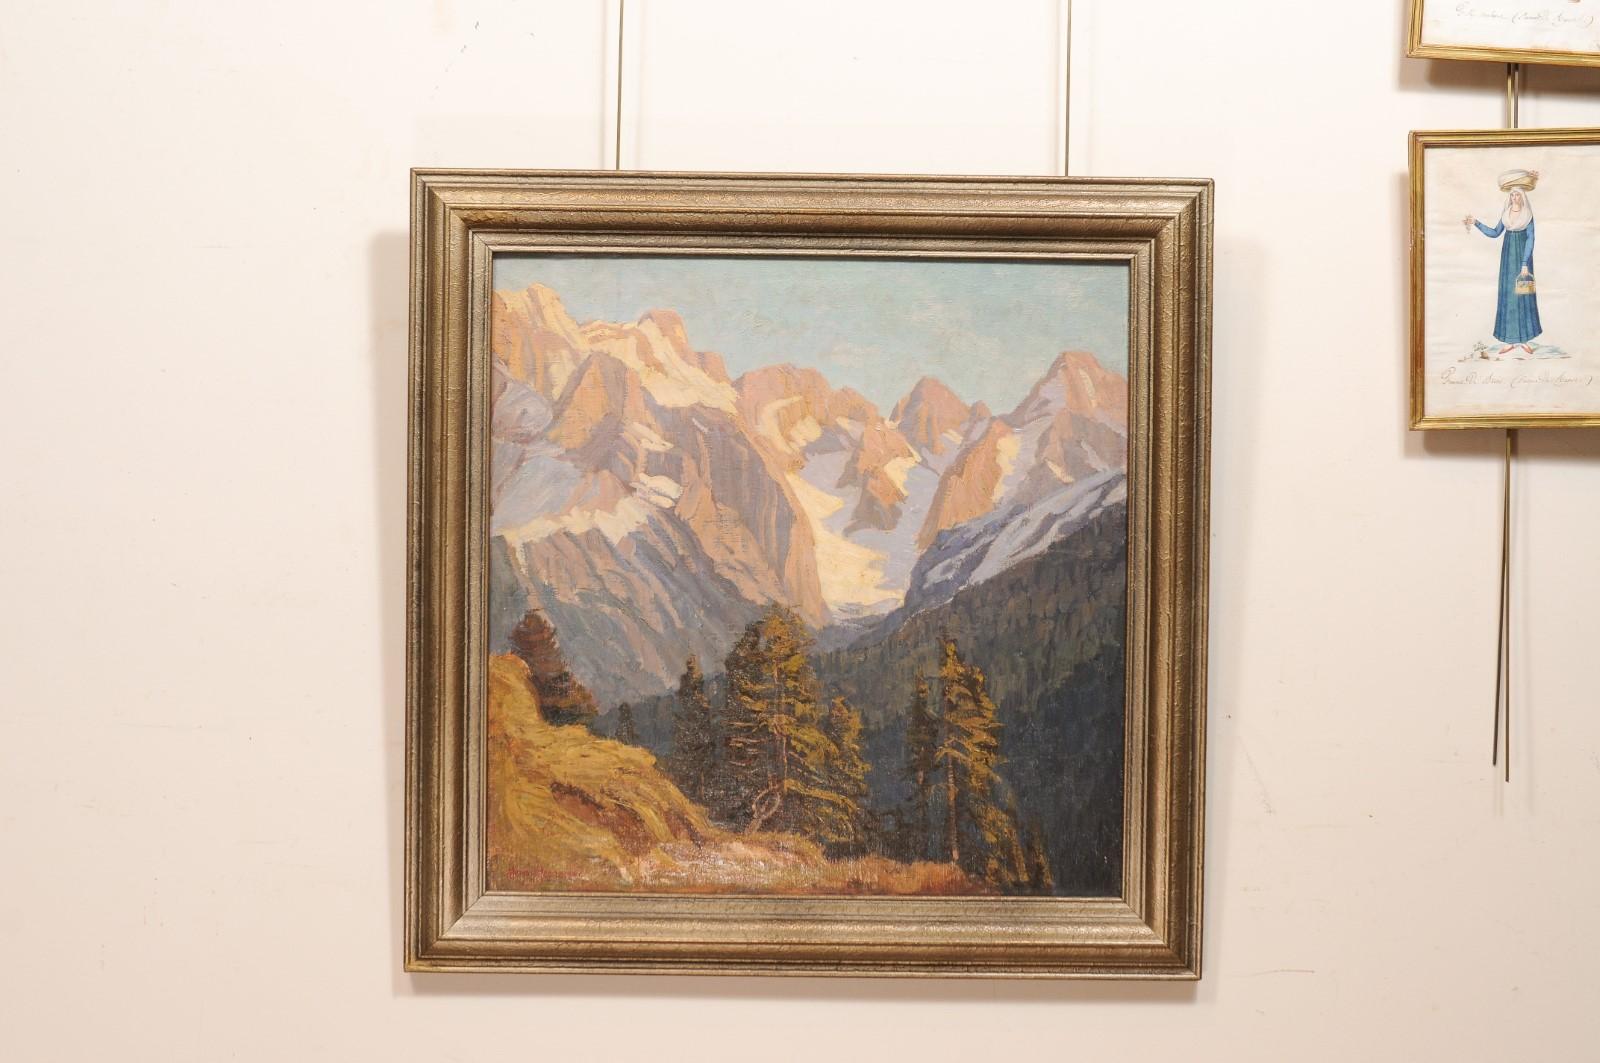 Gilt Framed Austrian Oil on Canvas Landscape Painting of the Alps Mountain Range, 20th Century